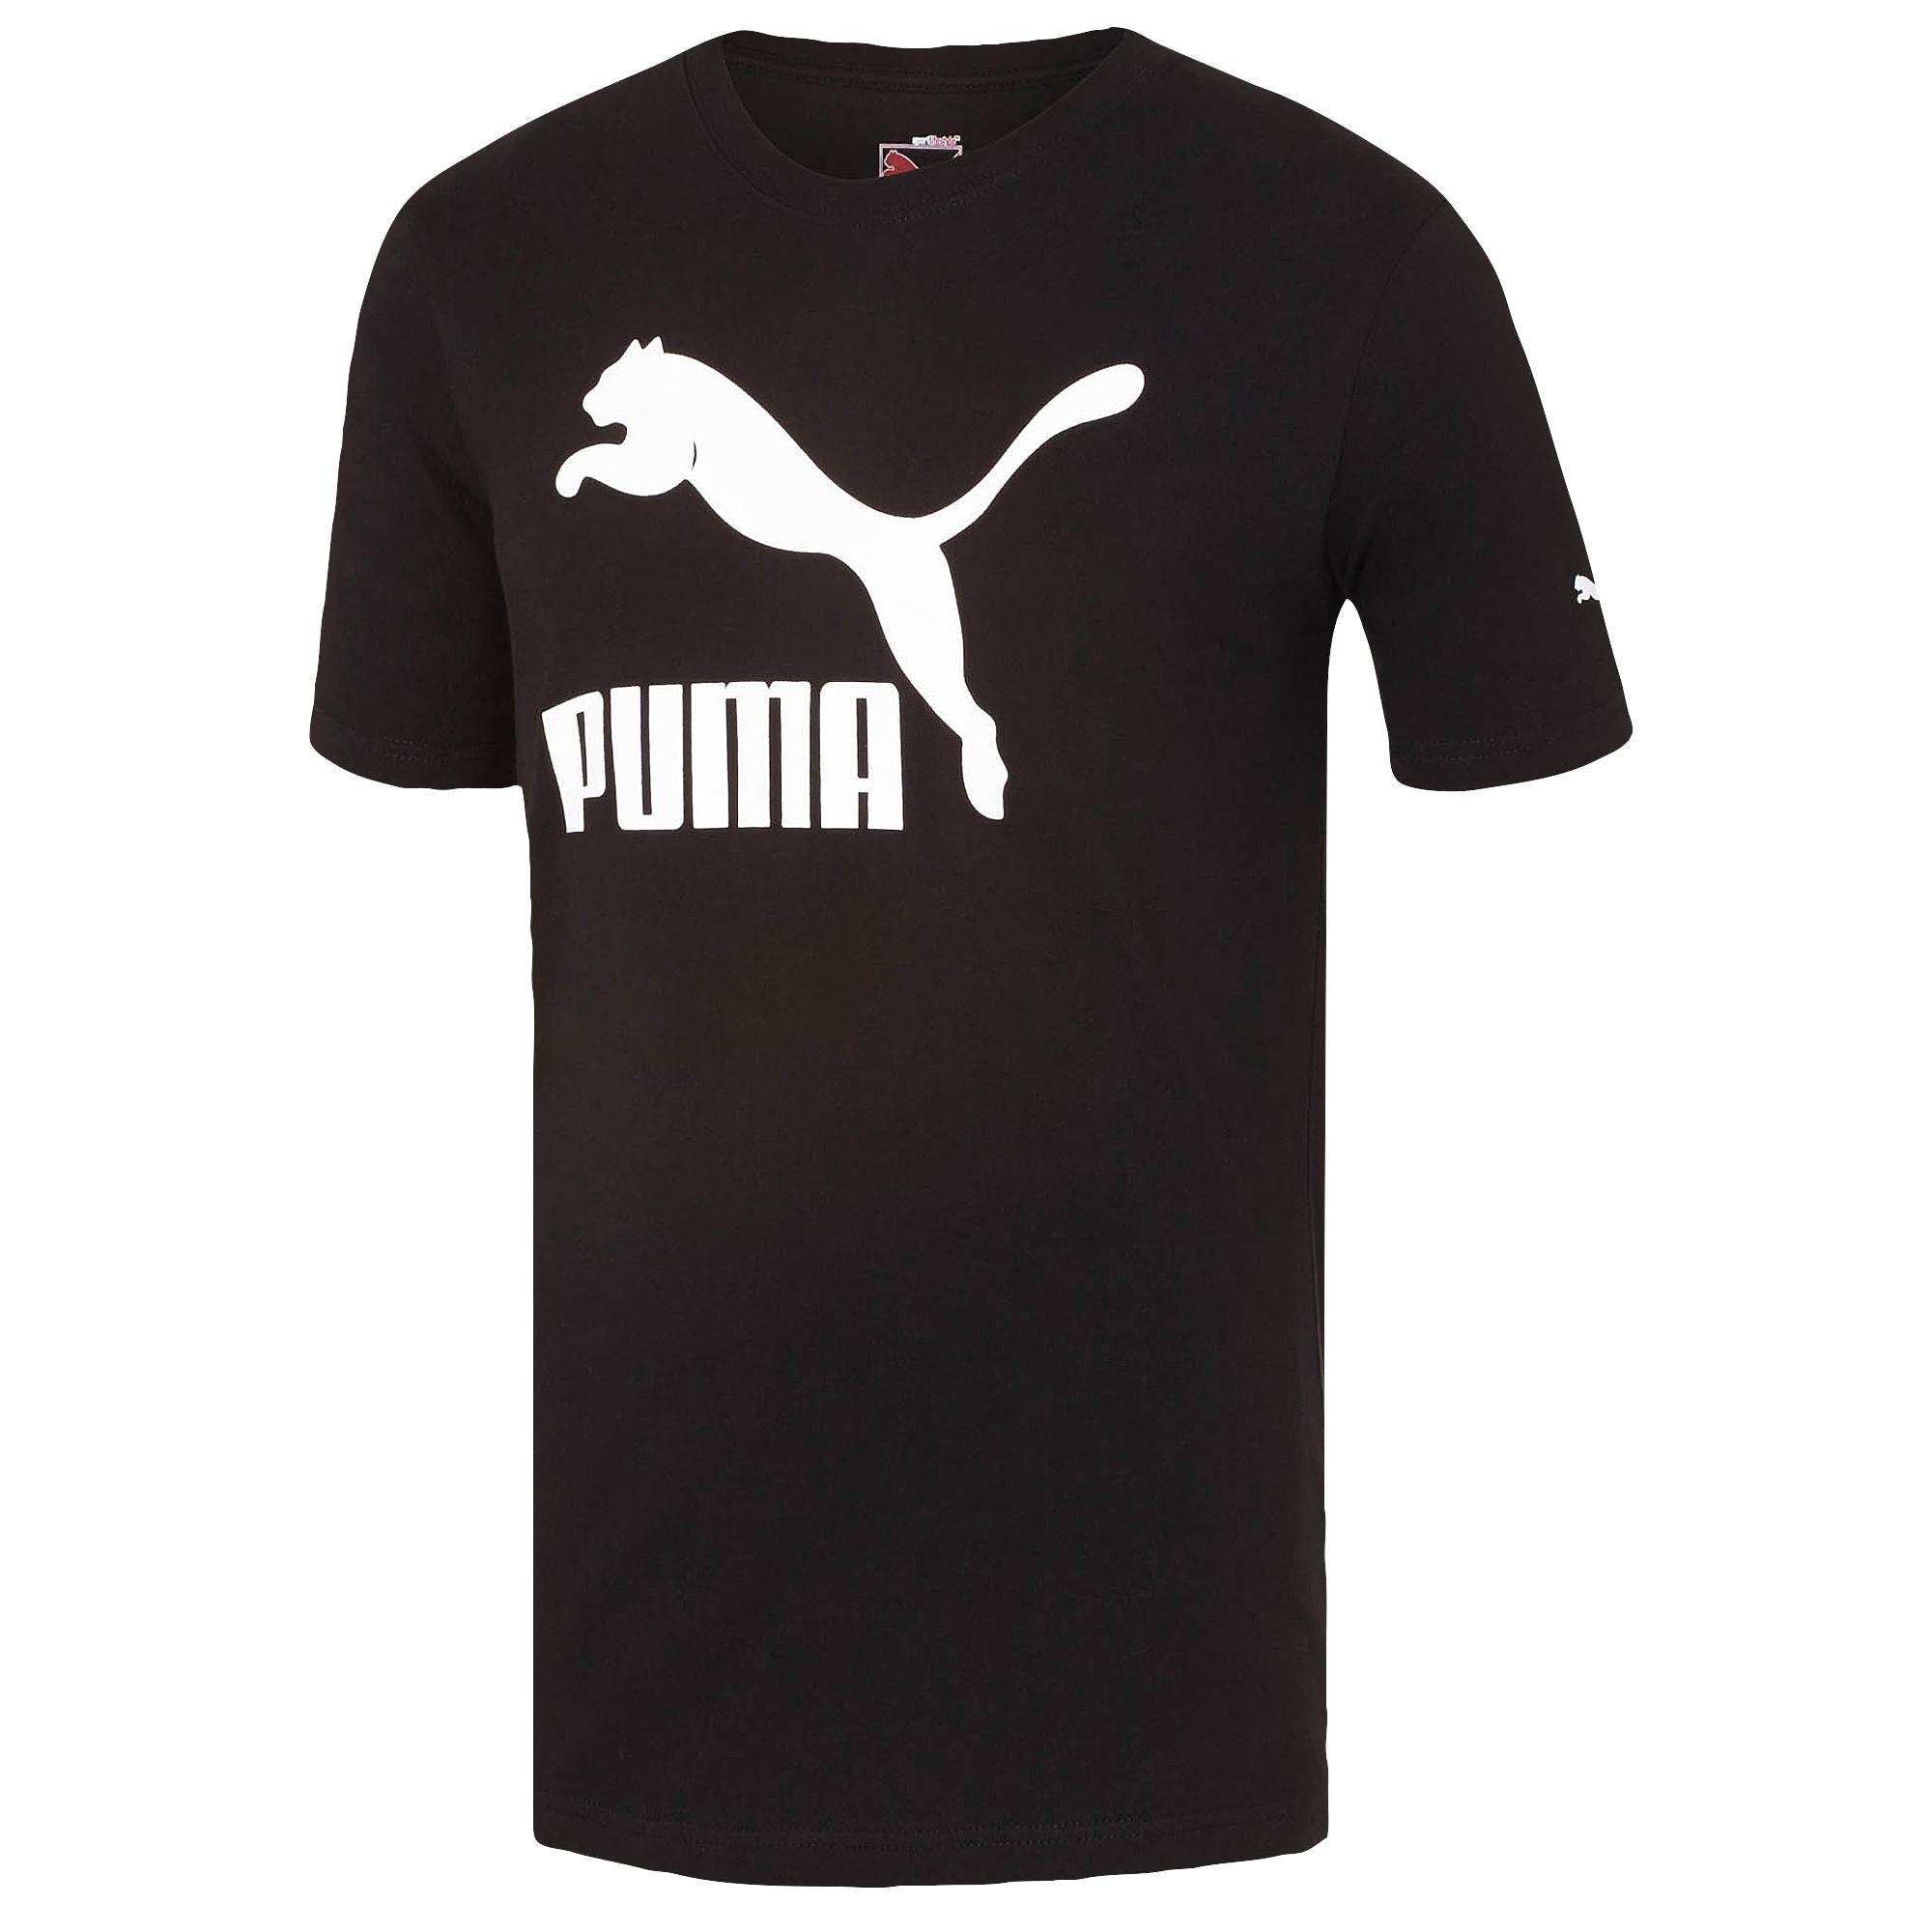 PUMA Men's Cotton Logo T-shirt in Black/White (Black) for Men - Save 50 ...